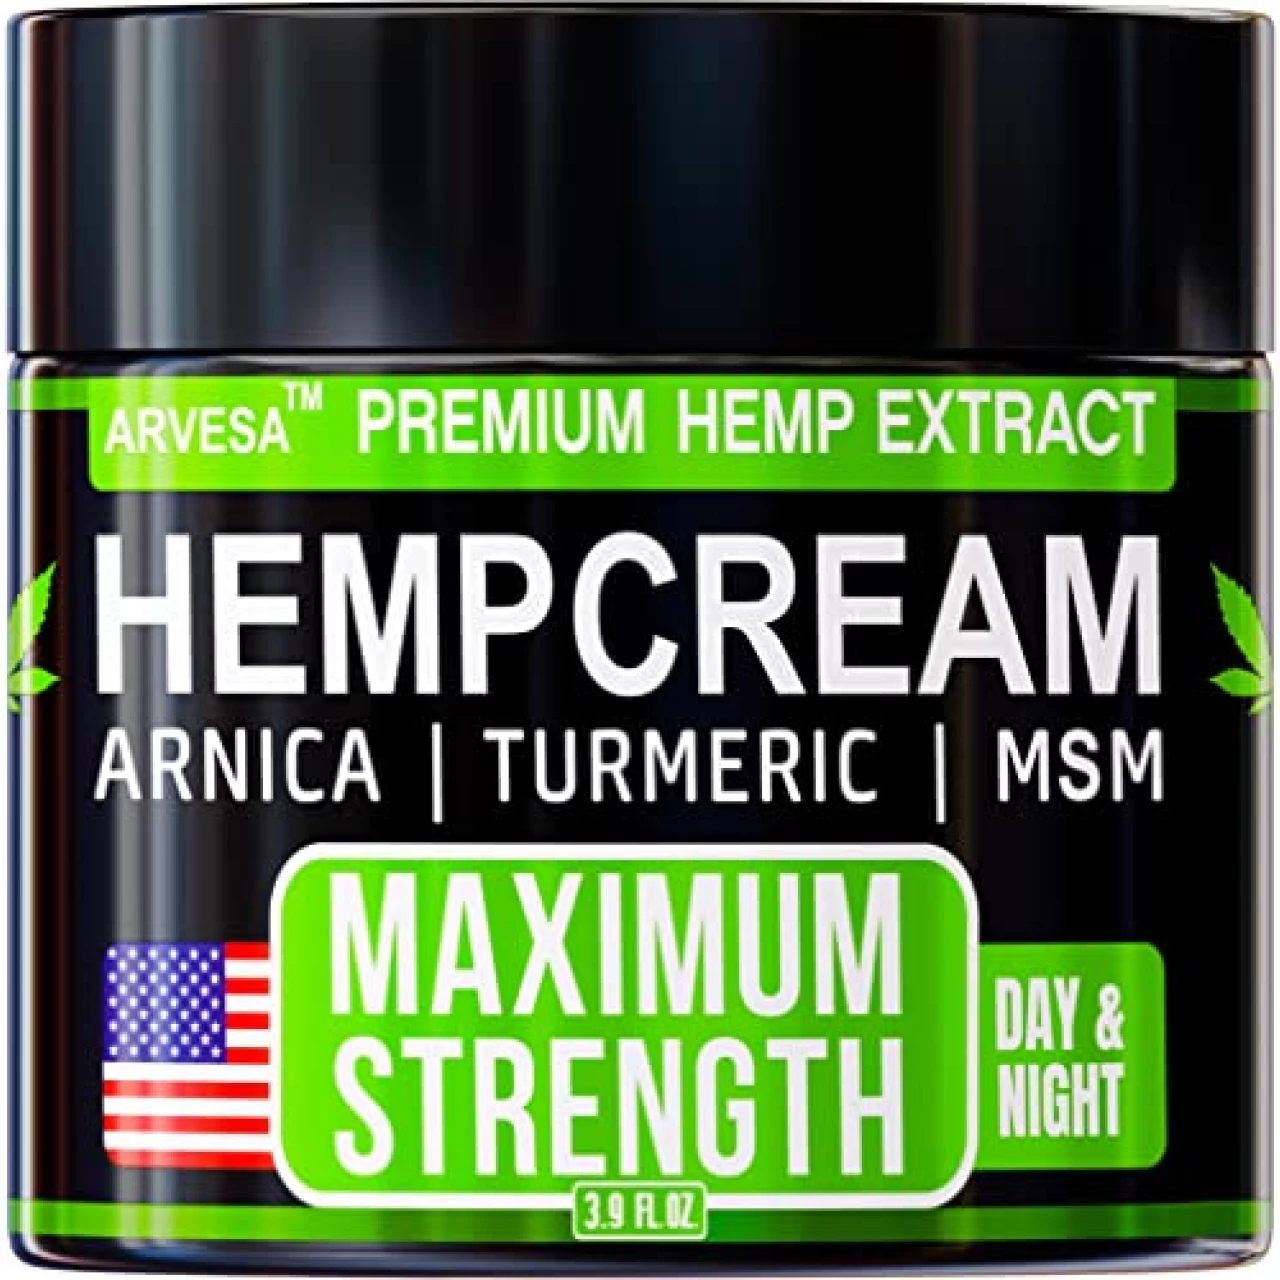 Hemp Cream - Maximum Strength - Relieve Muscle, Joint, Back, Knee - Natural Hemp Oil Extract Gel Rub with MSM - Glucosamine - Arnica - Turmeric - Maximum Strength - Made in USA